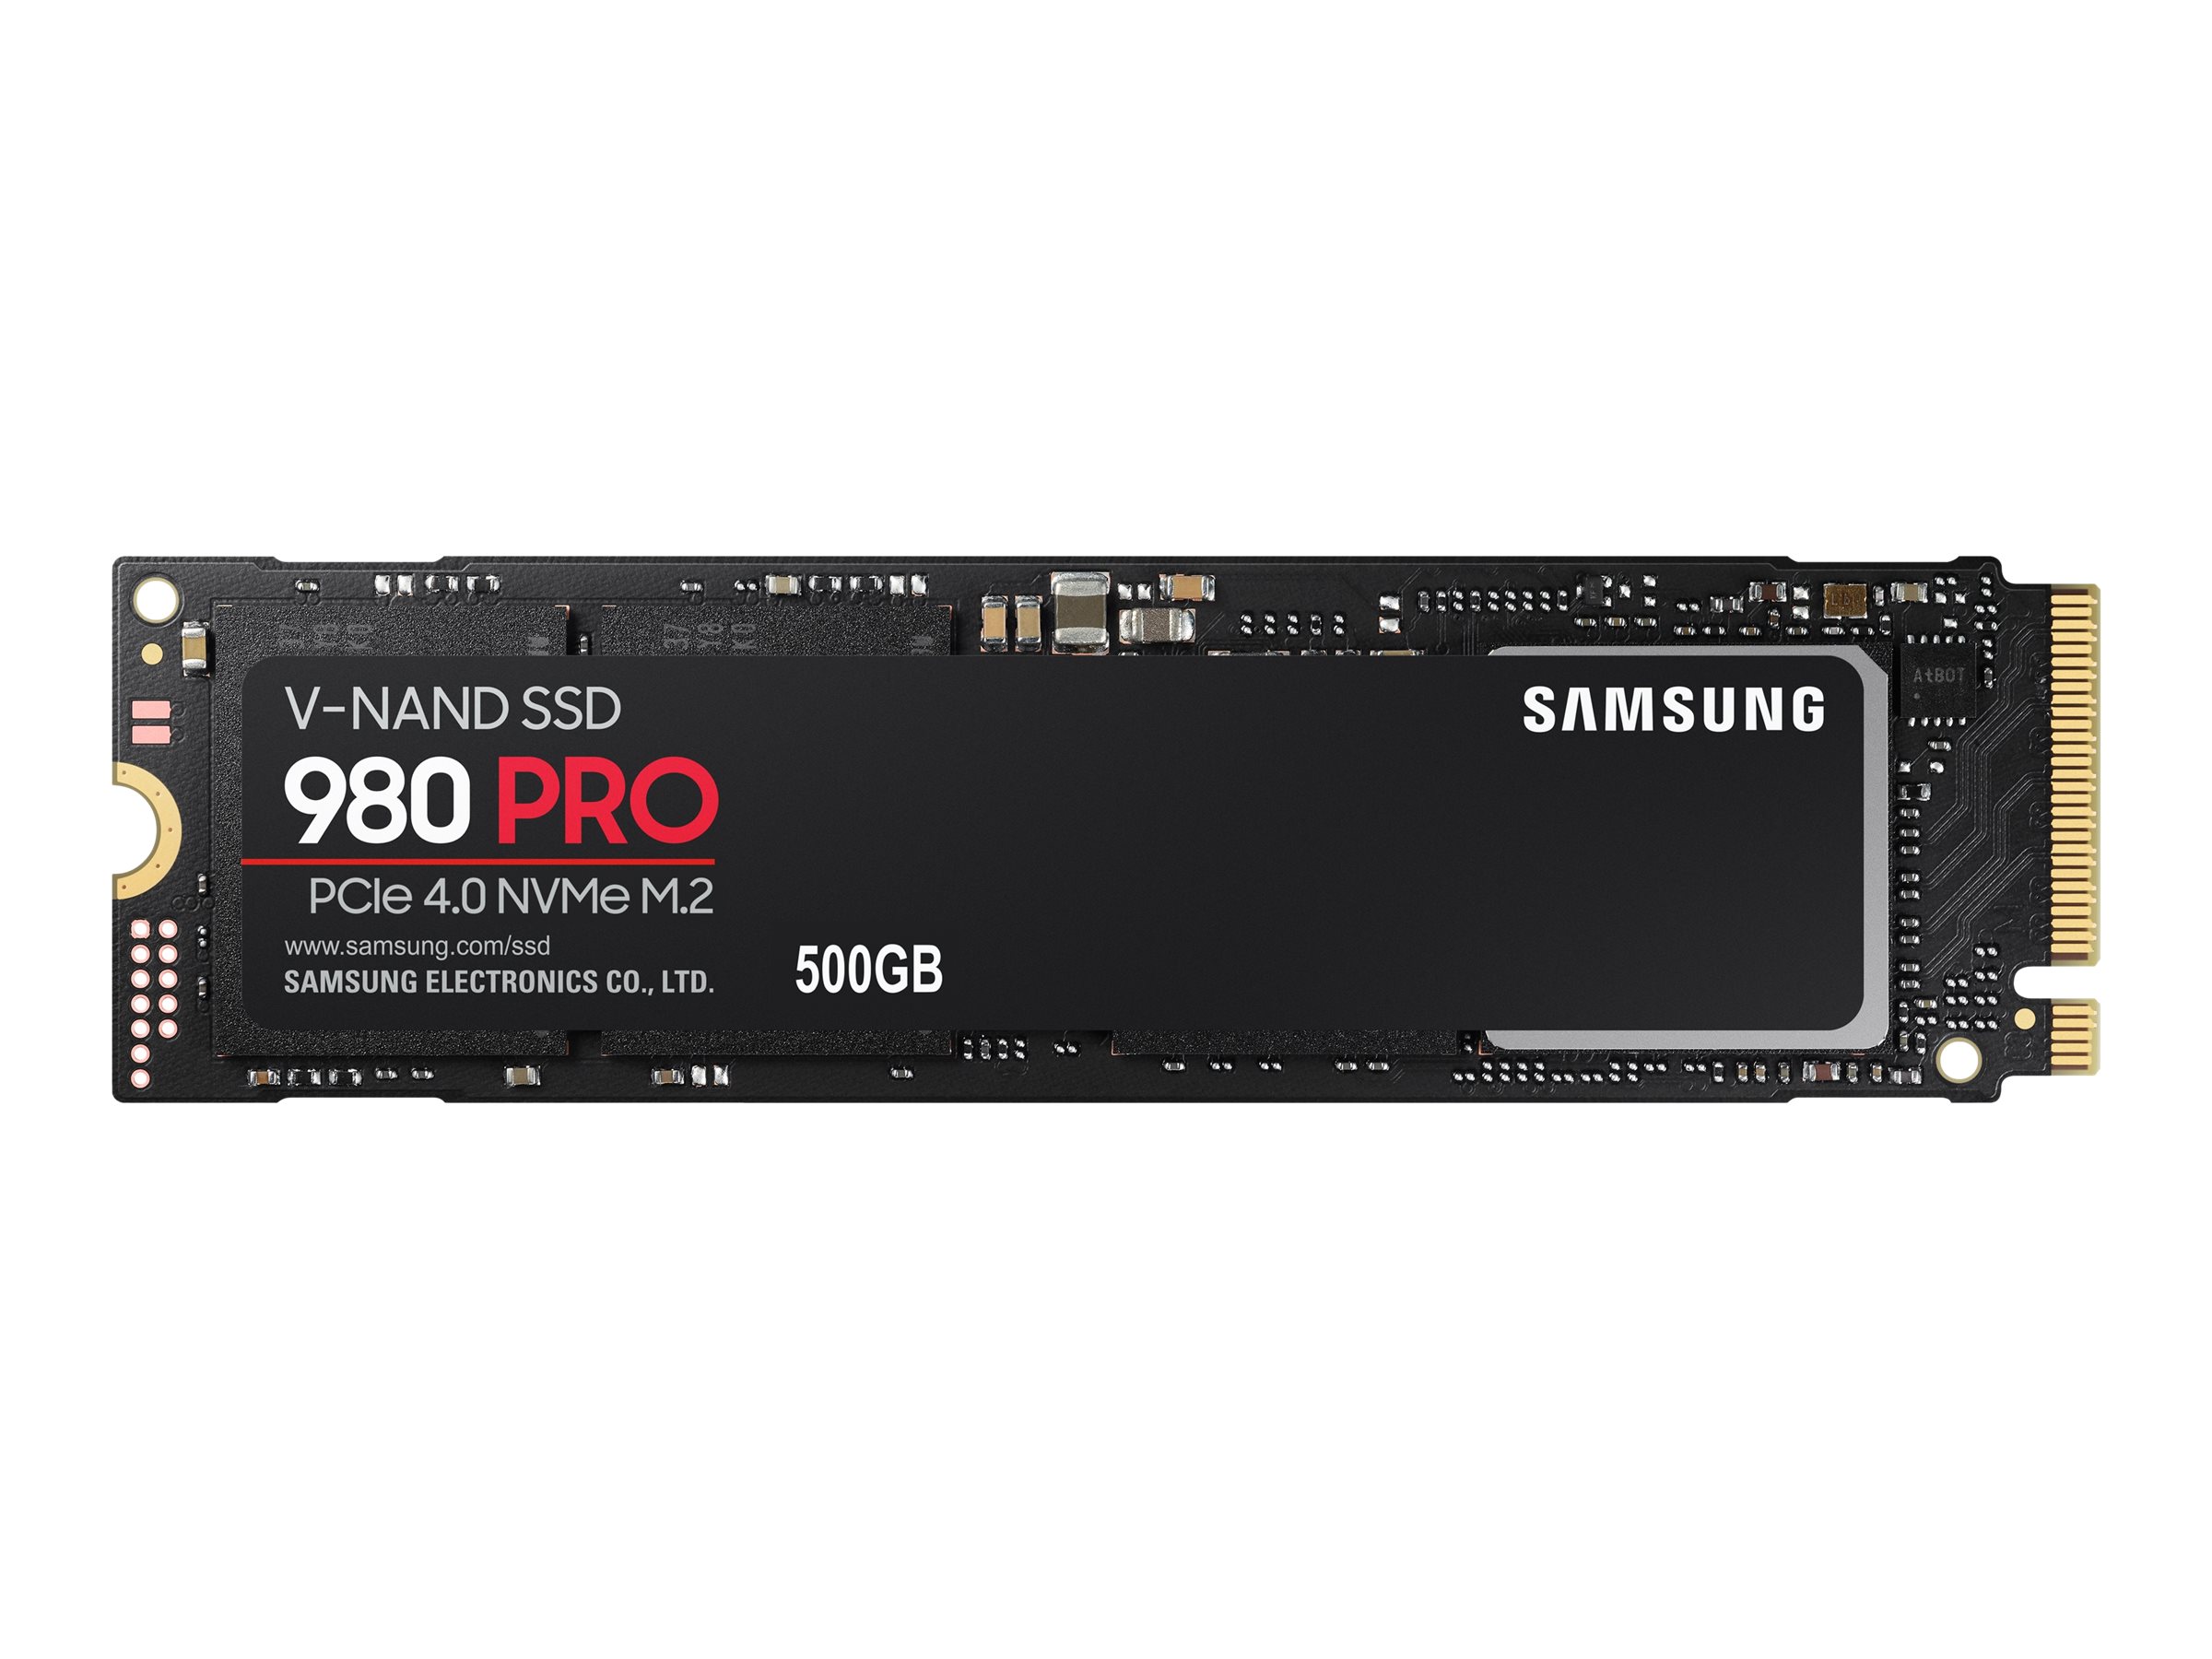 Samsung 980 Pro 500GB - PCIe 4.0 - M.2 NVMe SSD